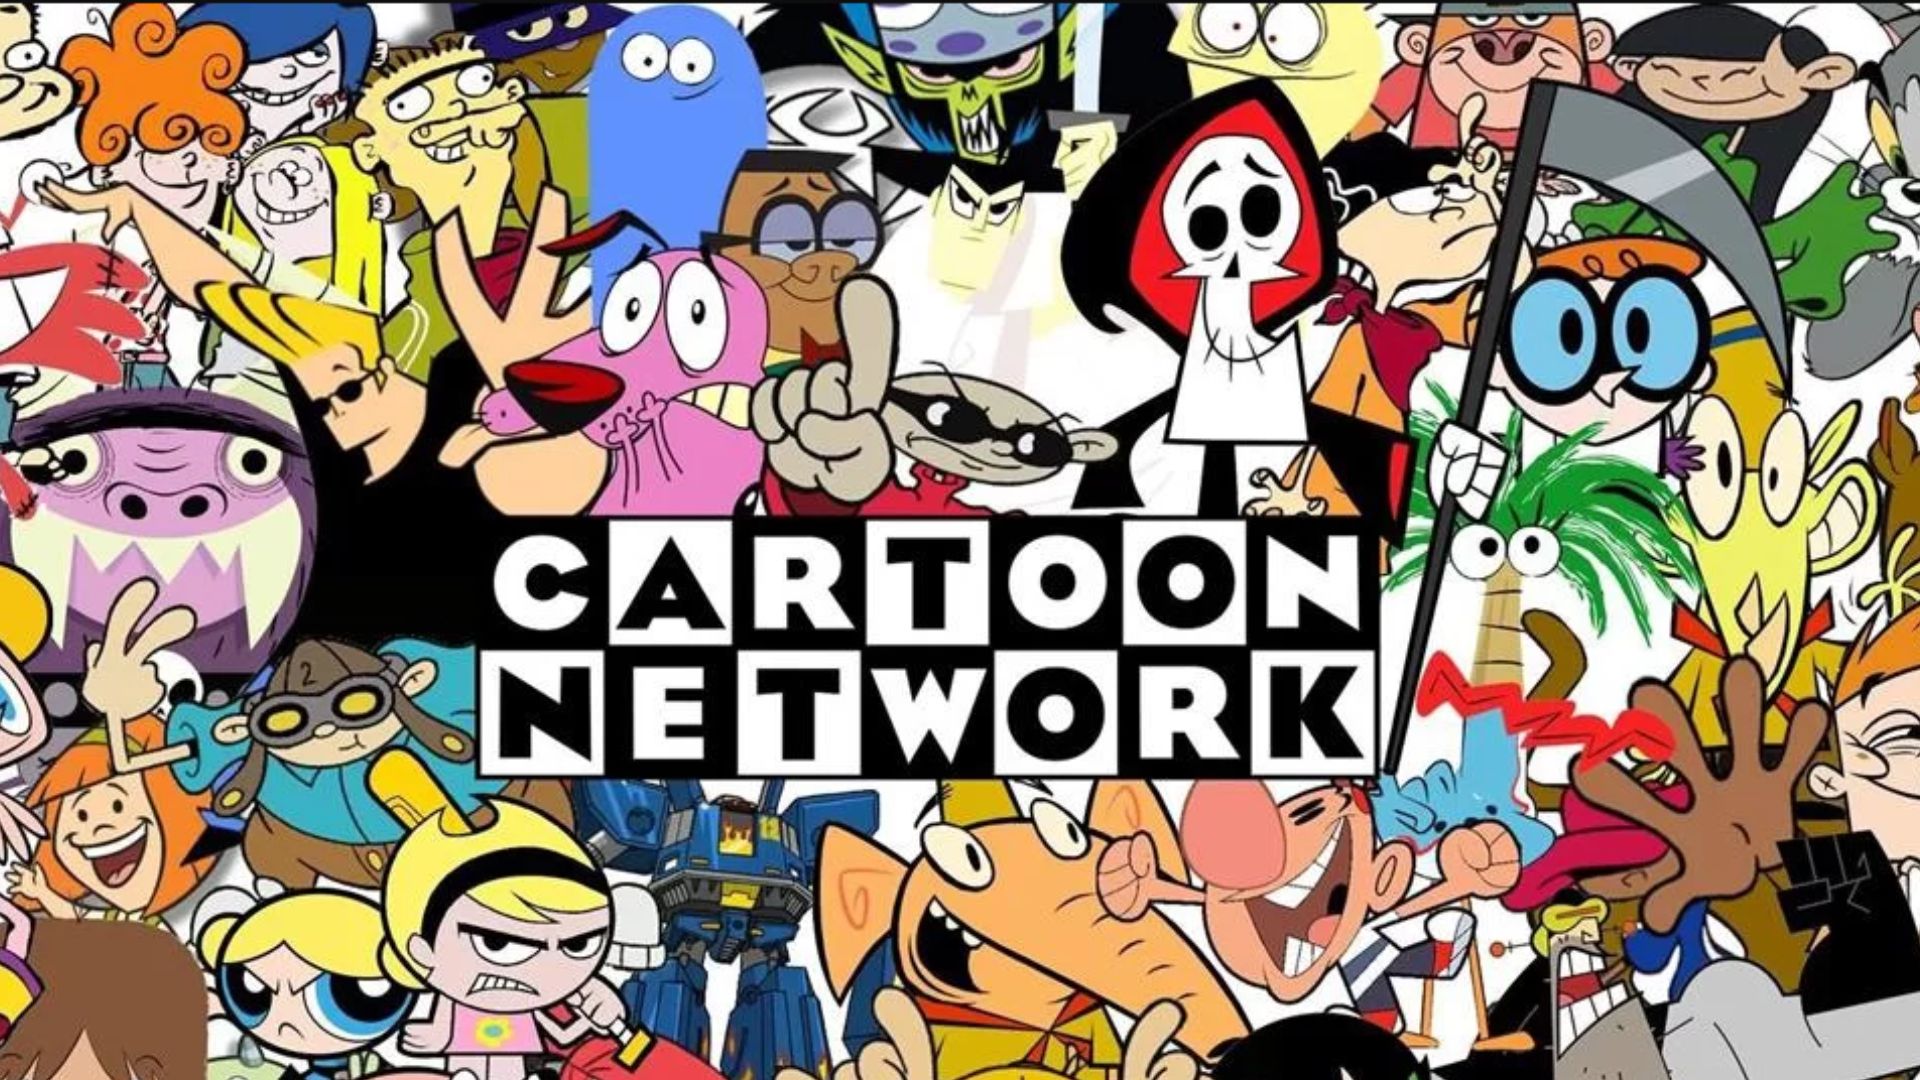 Warner Bros. Animation e Cartoon Network vai produzir animes